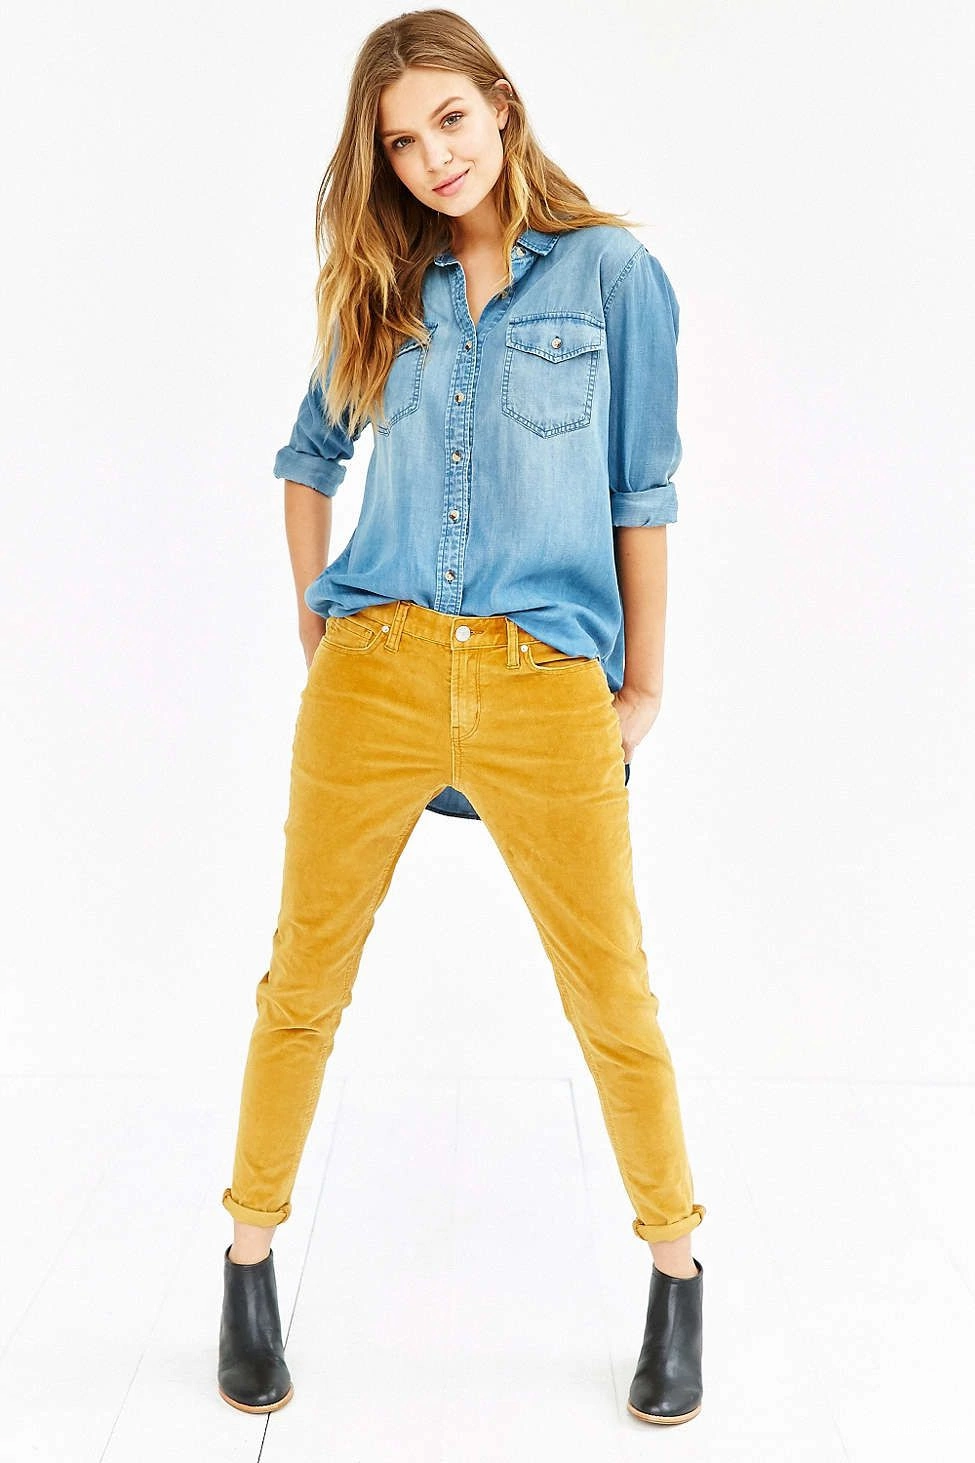 Горчичные джинсы. Брюки Urban Outfitters. Горчичные брюки. Джинсы желтые женские. Горчичные брюки женские.